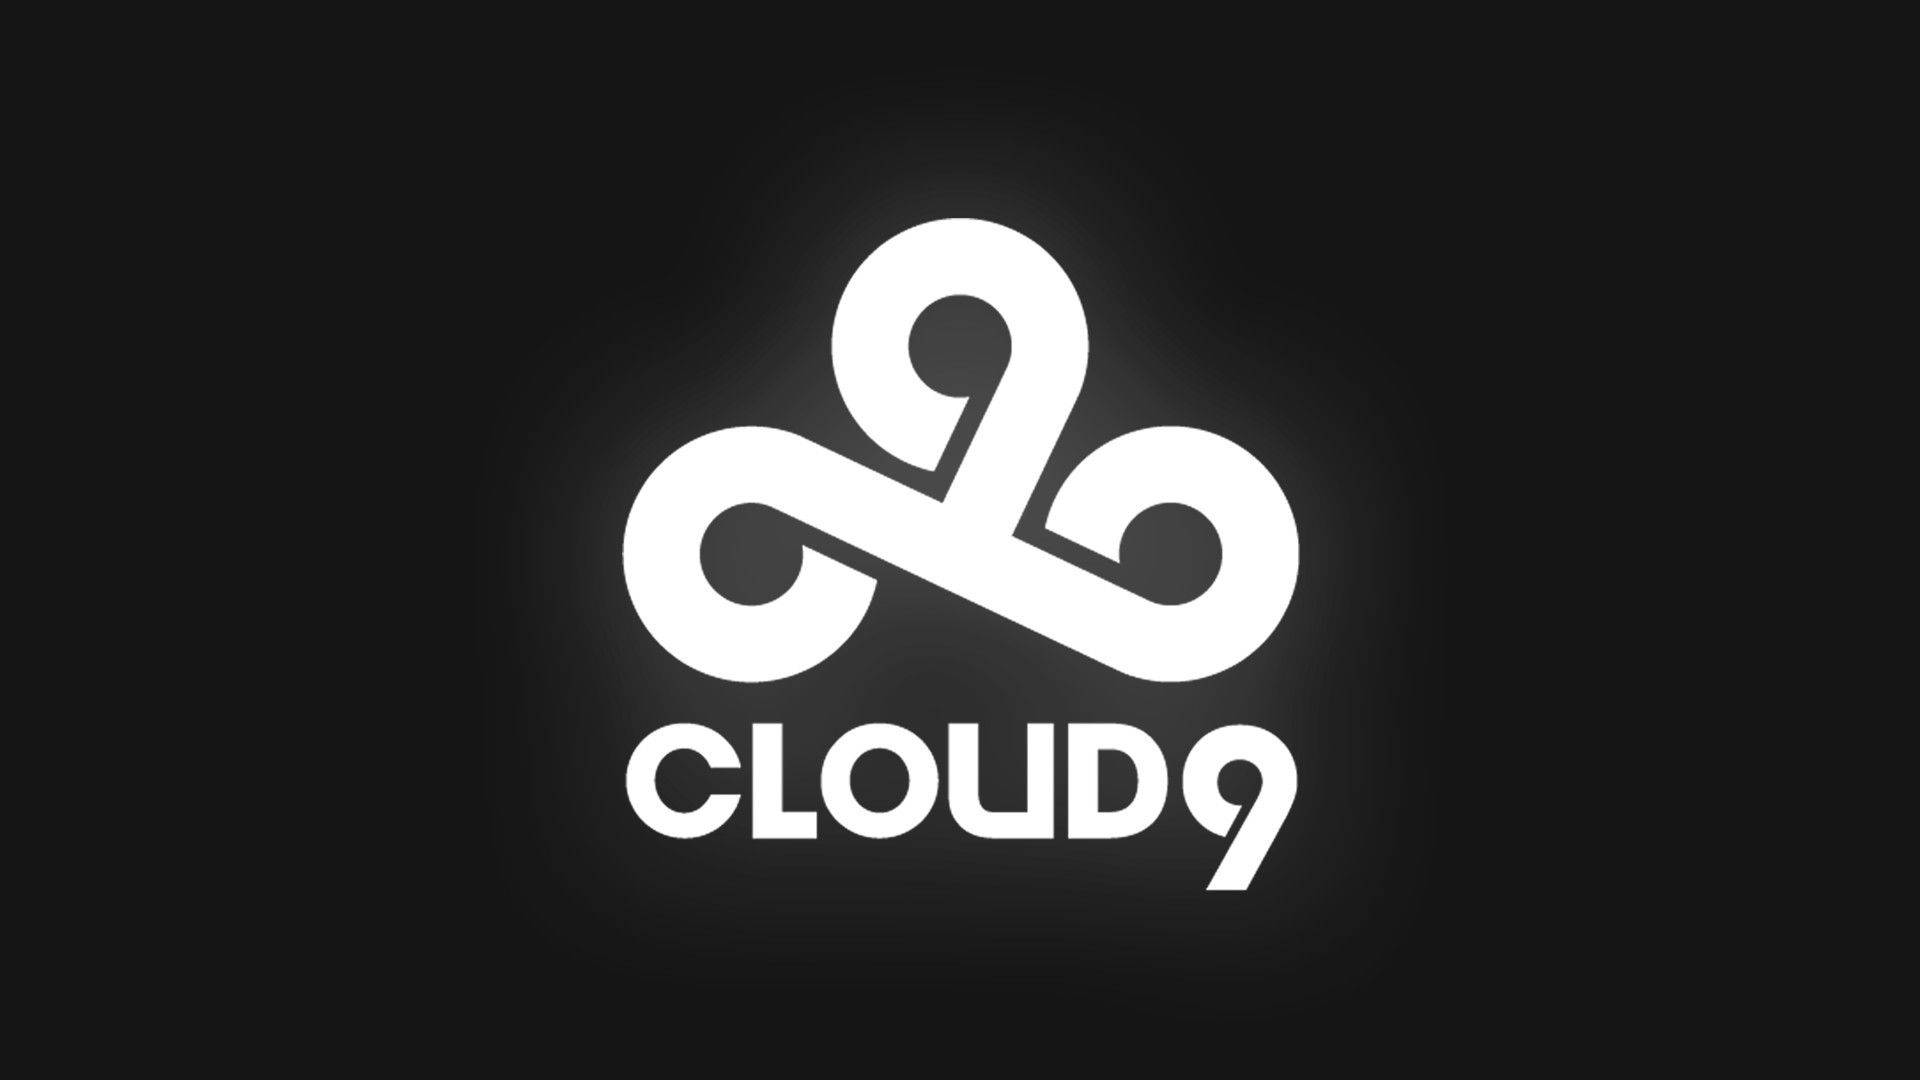 Cloud9 White Glowing Effect Logo Background